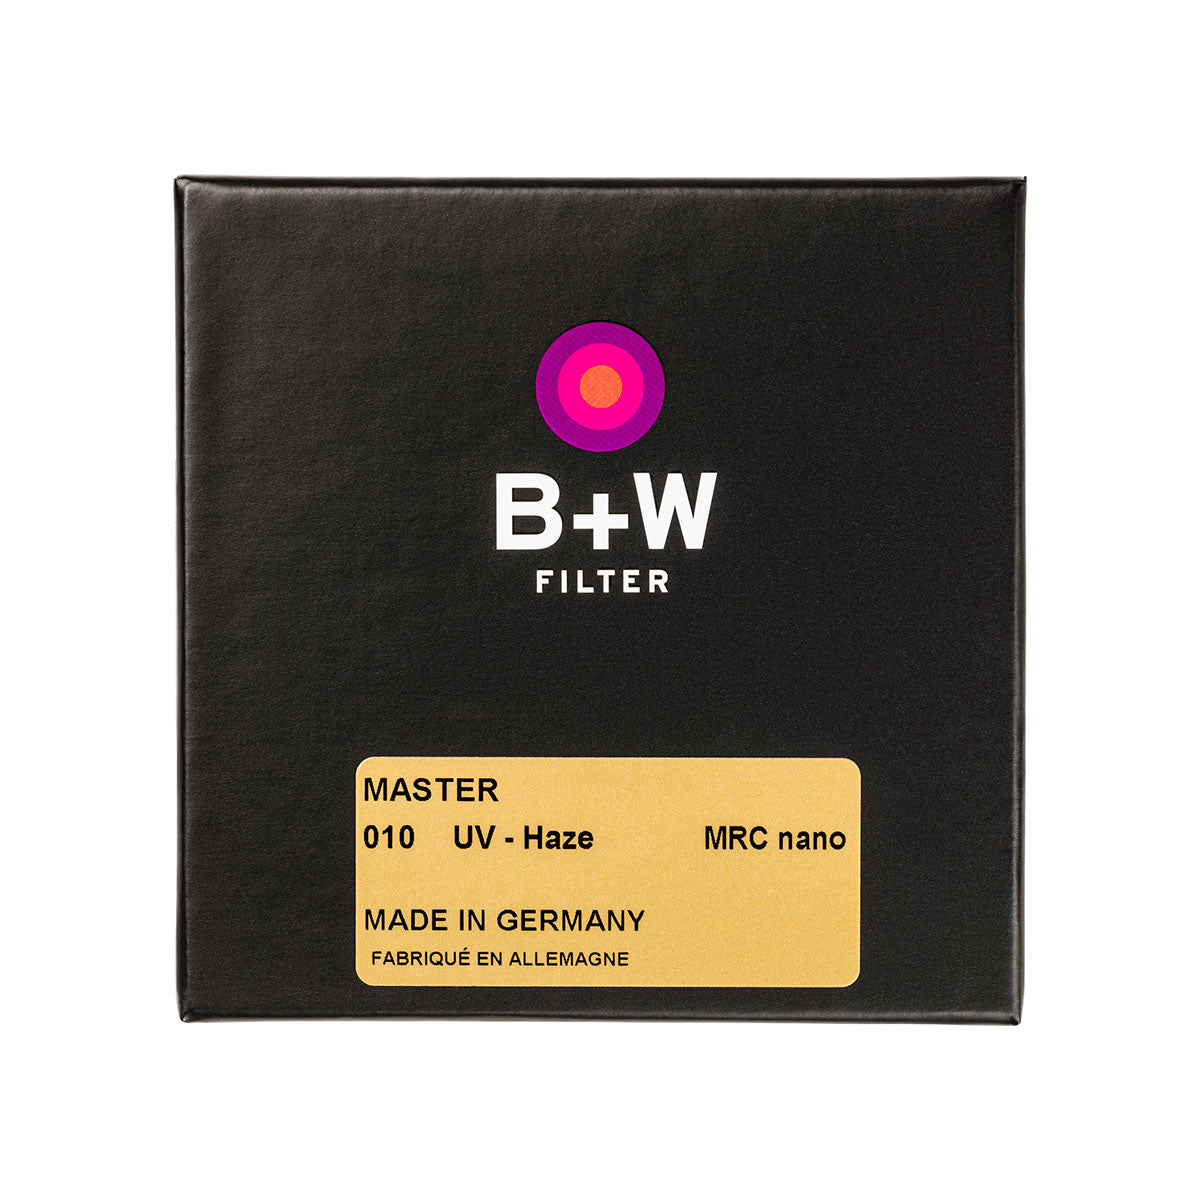 B+W Master 010 UV-Haze Filter MRC Nano (UV Filter 保護濾鏡) 濾鏡 Microworks Online Store